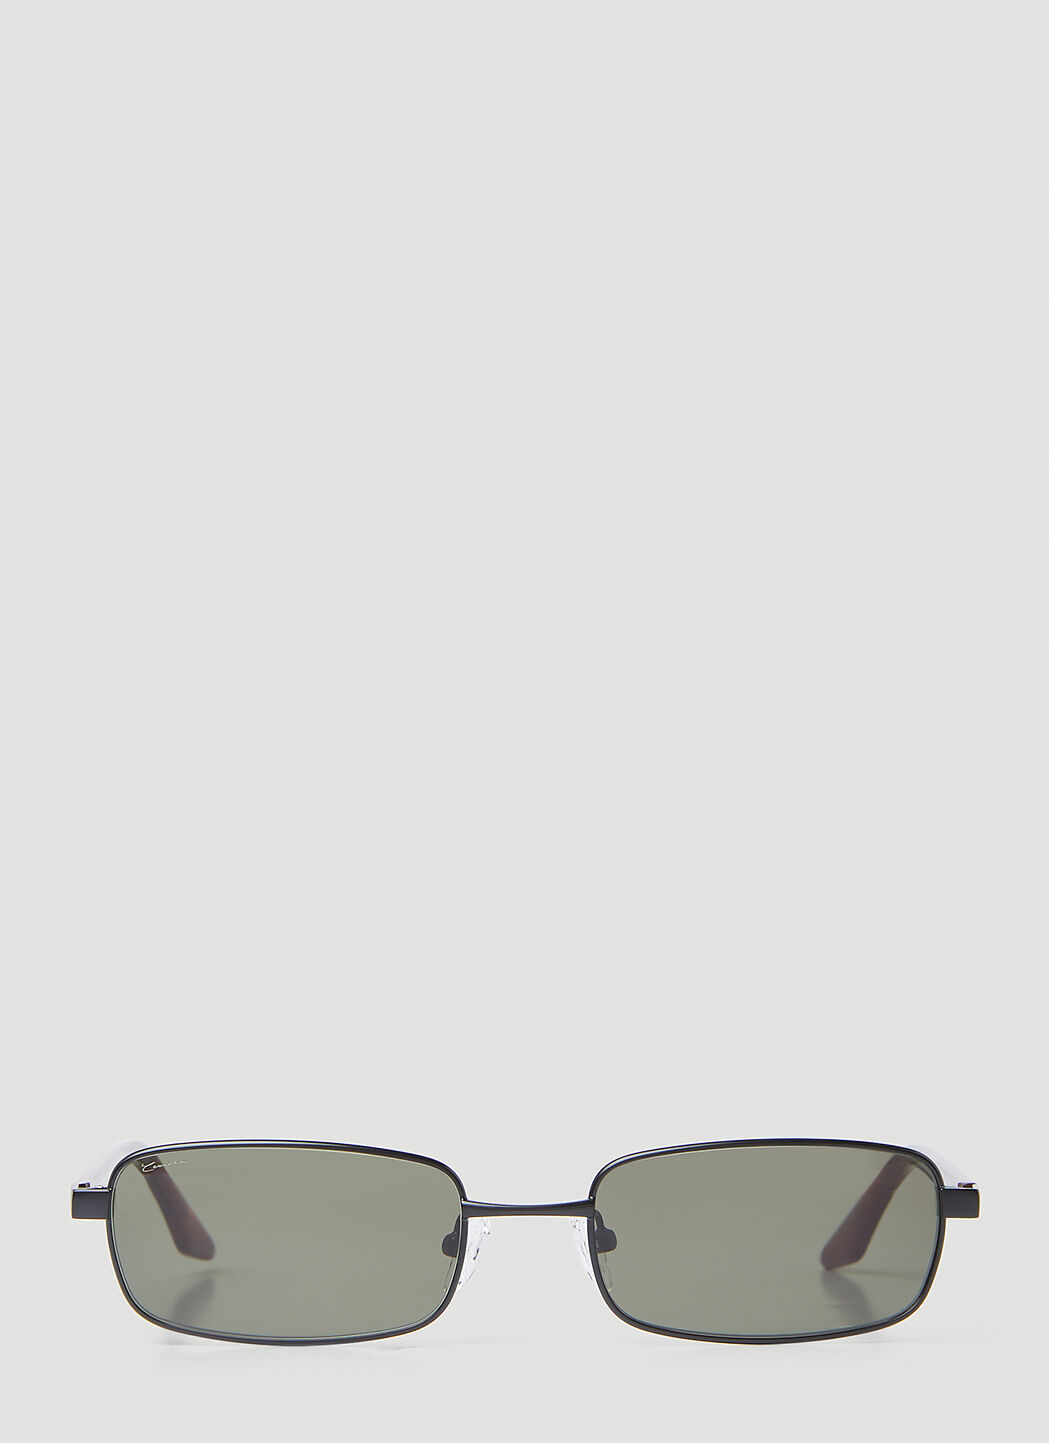 Burberry Kenny Sunglasses Beige bur0143010